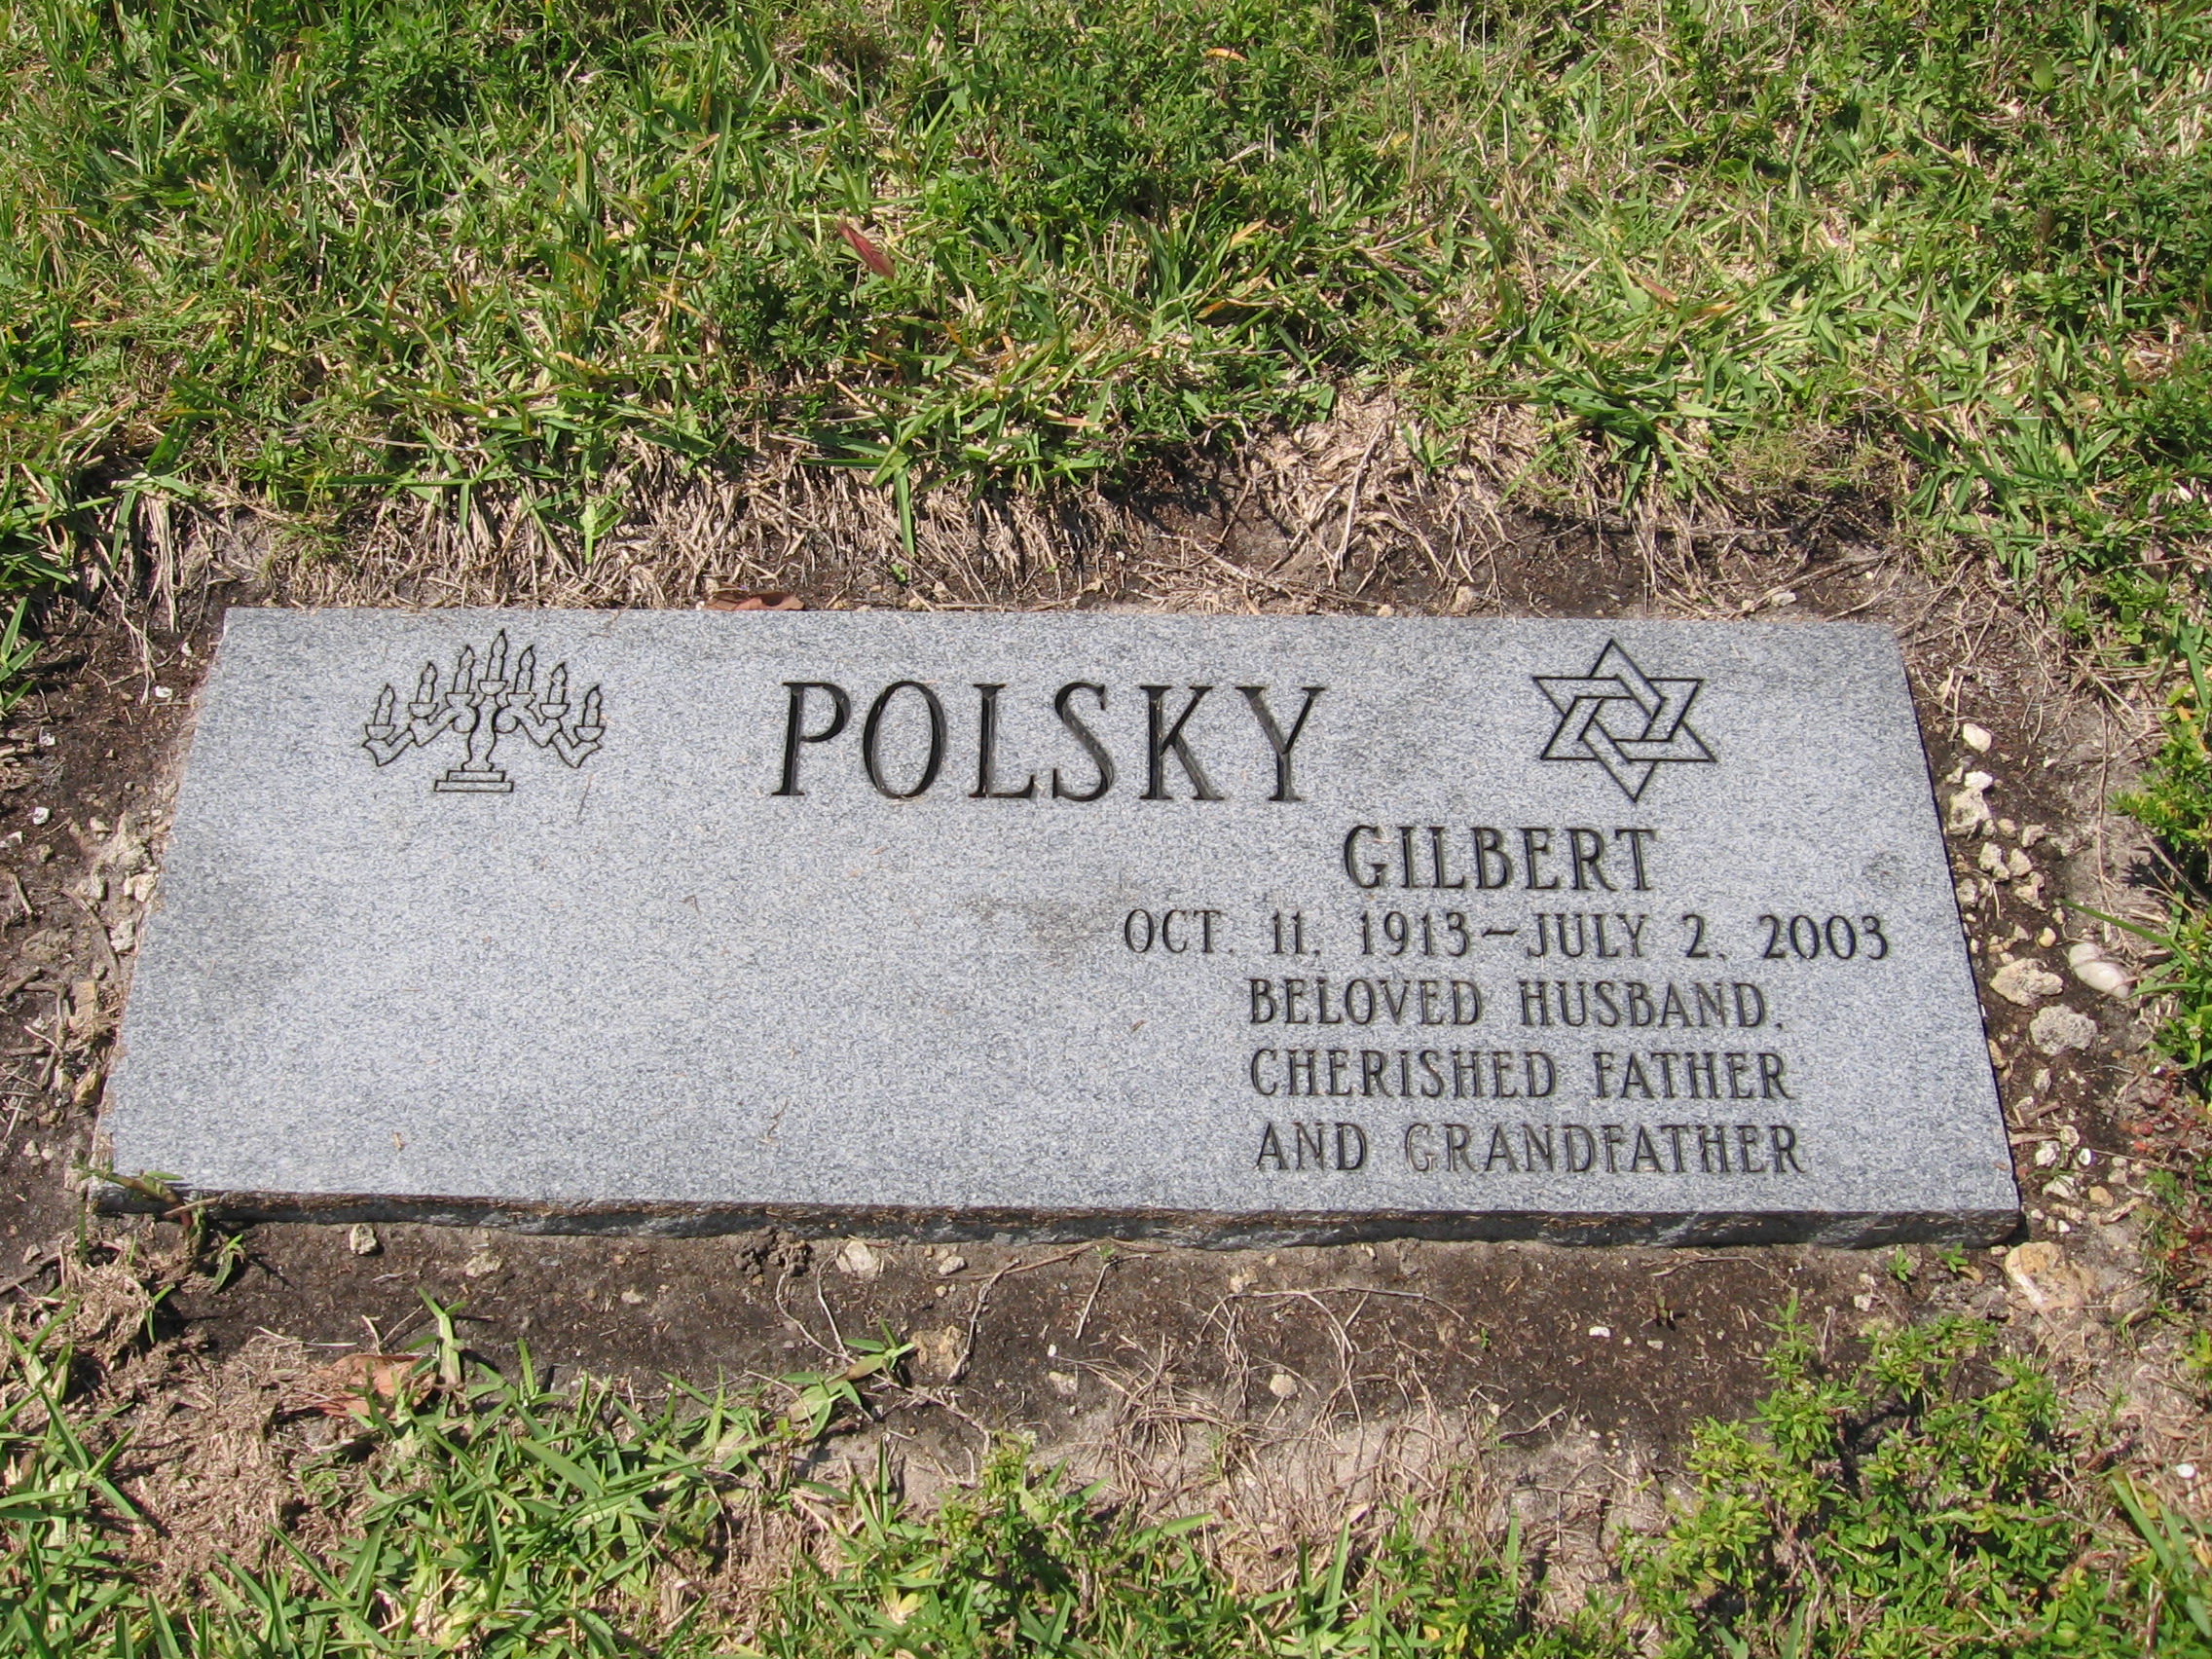 Gilbert Polsky